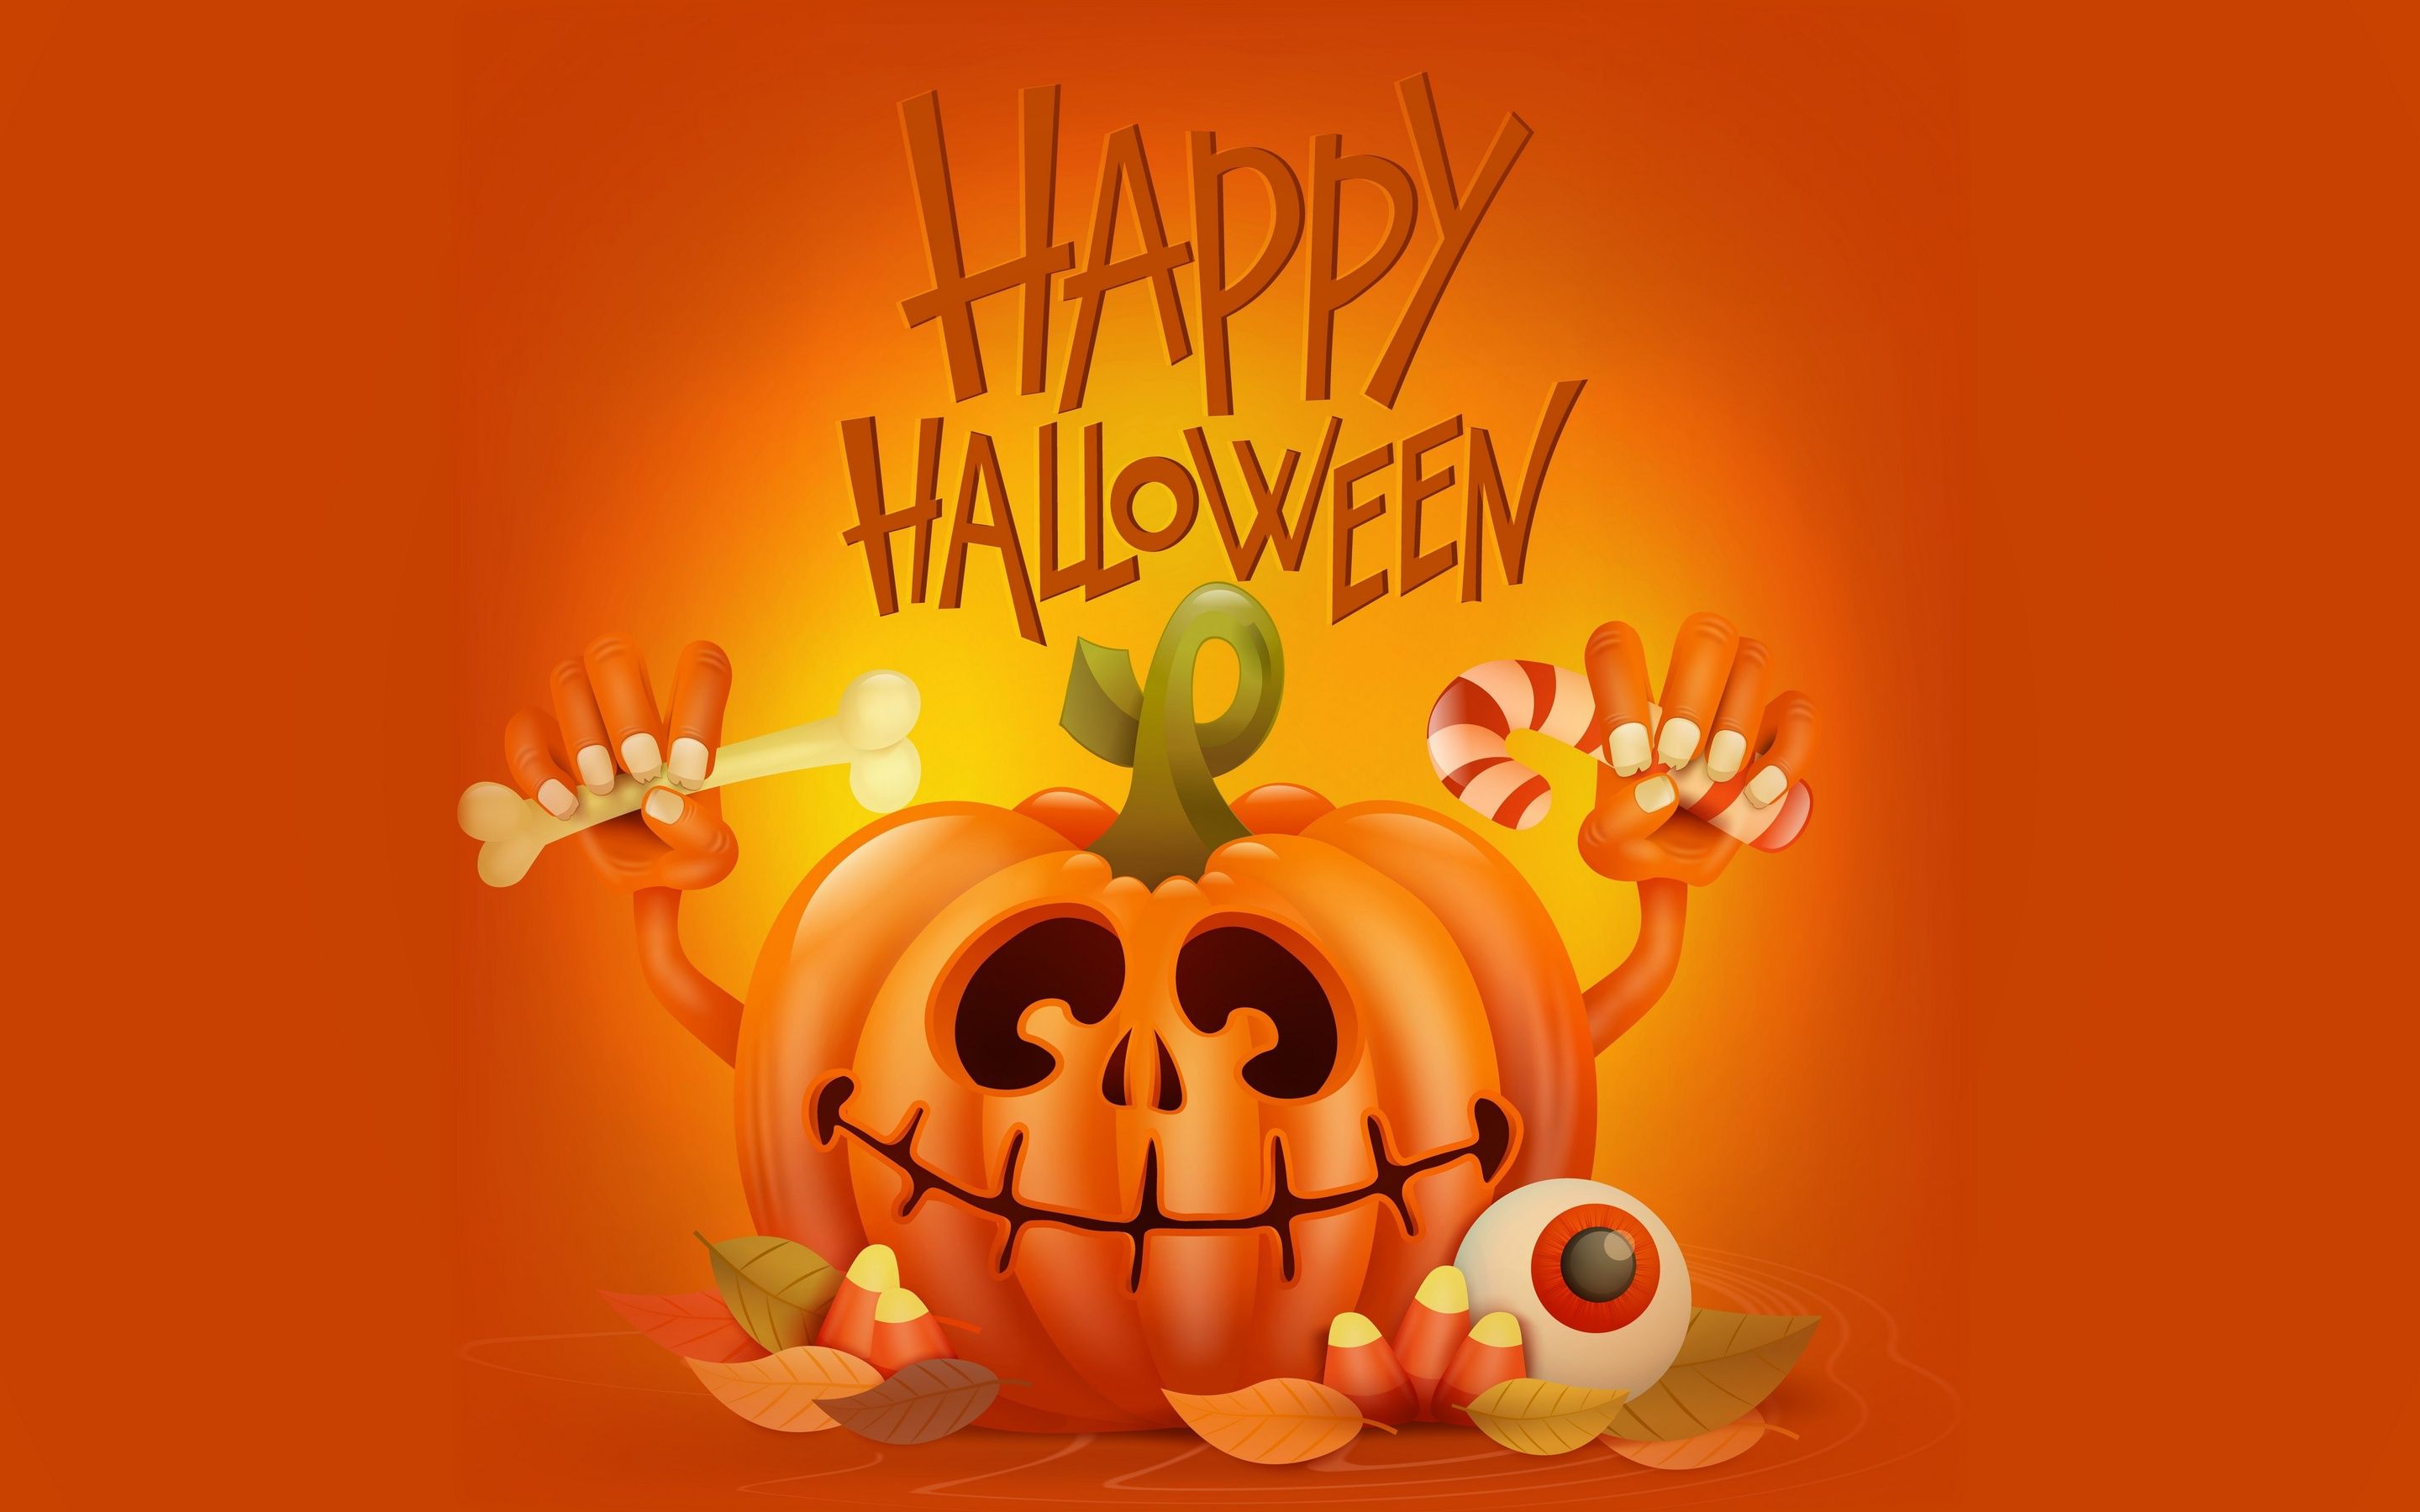 Happy Halloween 4k Macbook Pro Retina HD 4k Wallpaper, Image, Background, Photo and Picture